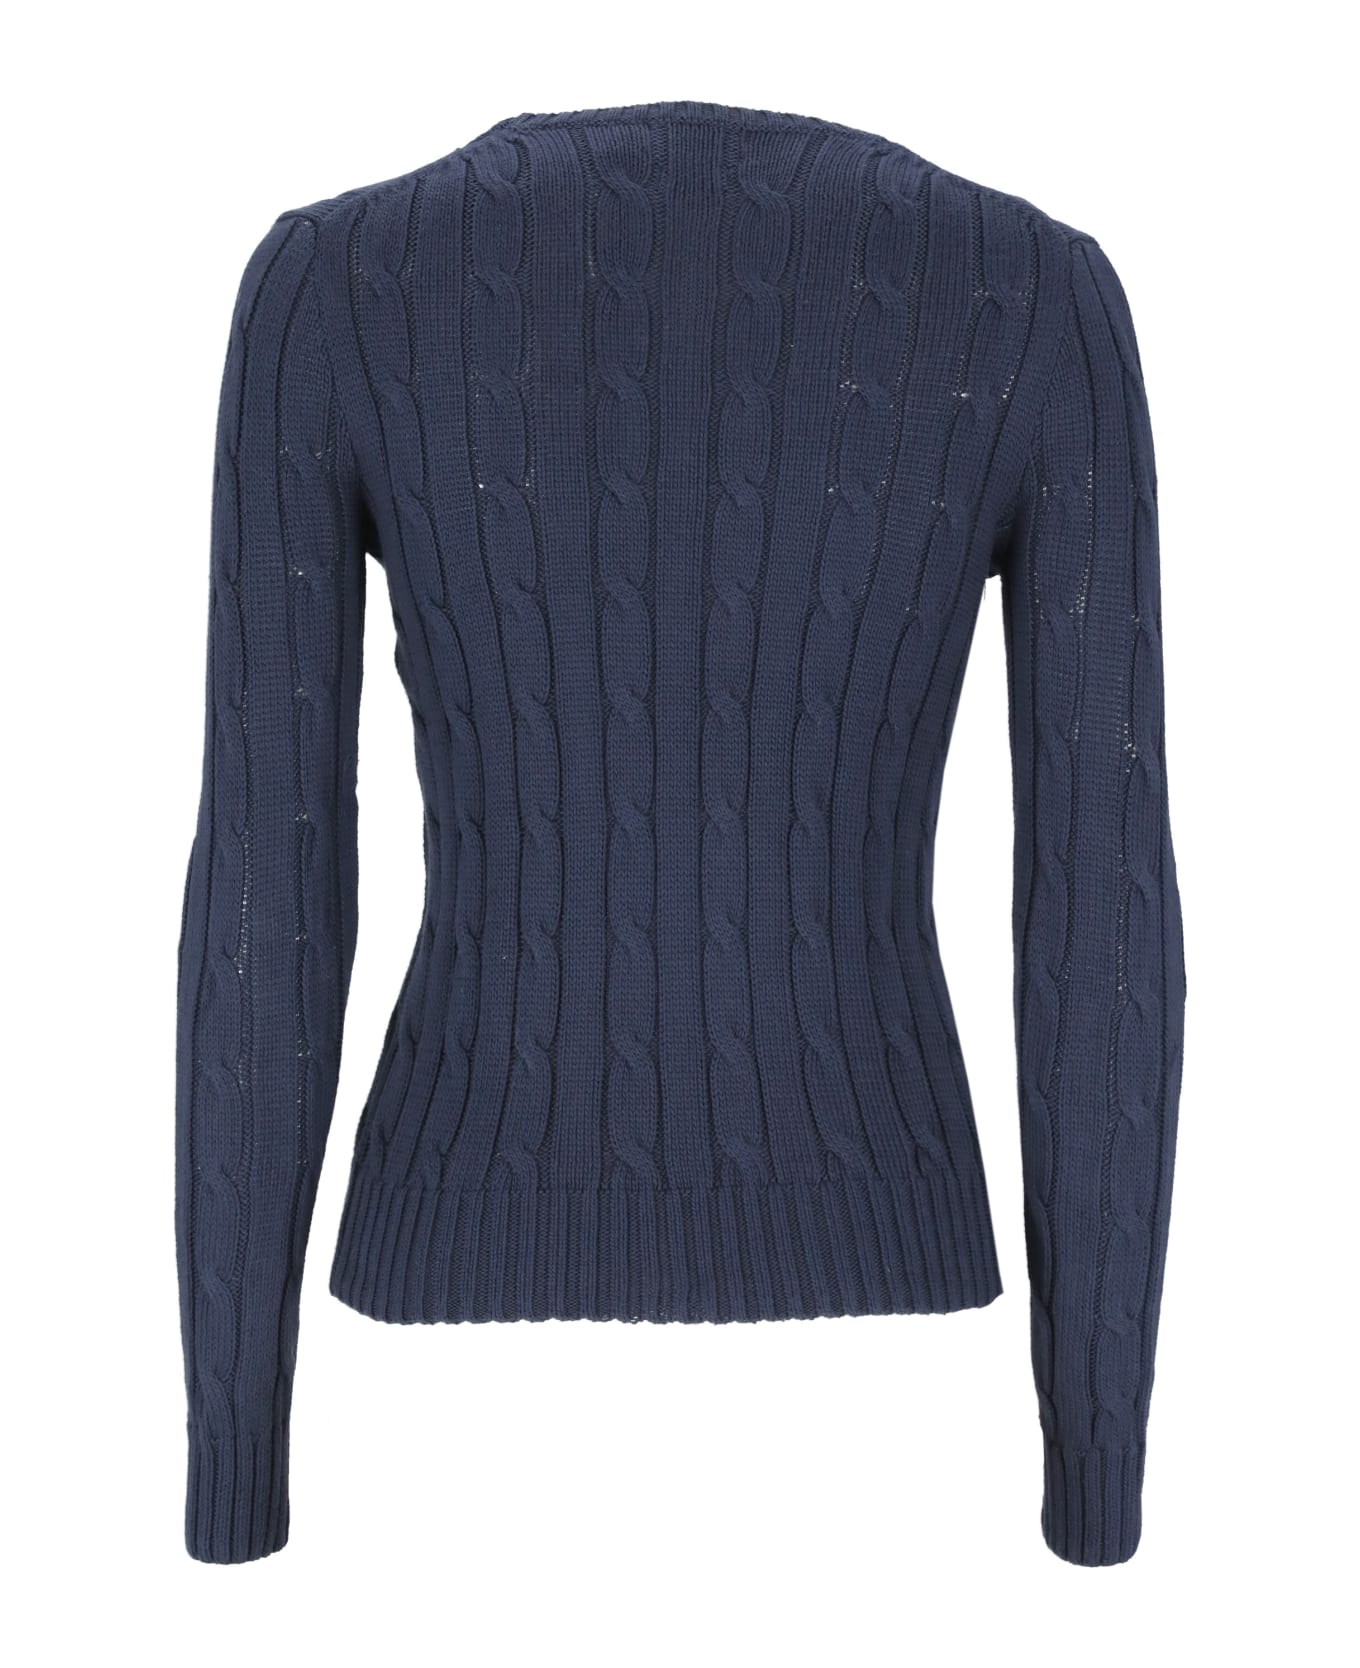 Ralph Lauren Sweater With Pony - Blue